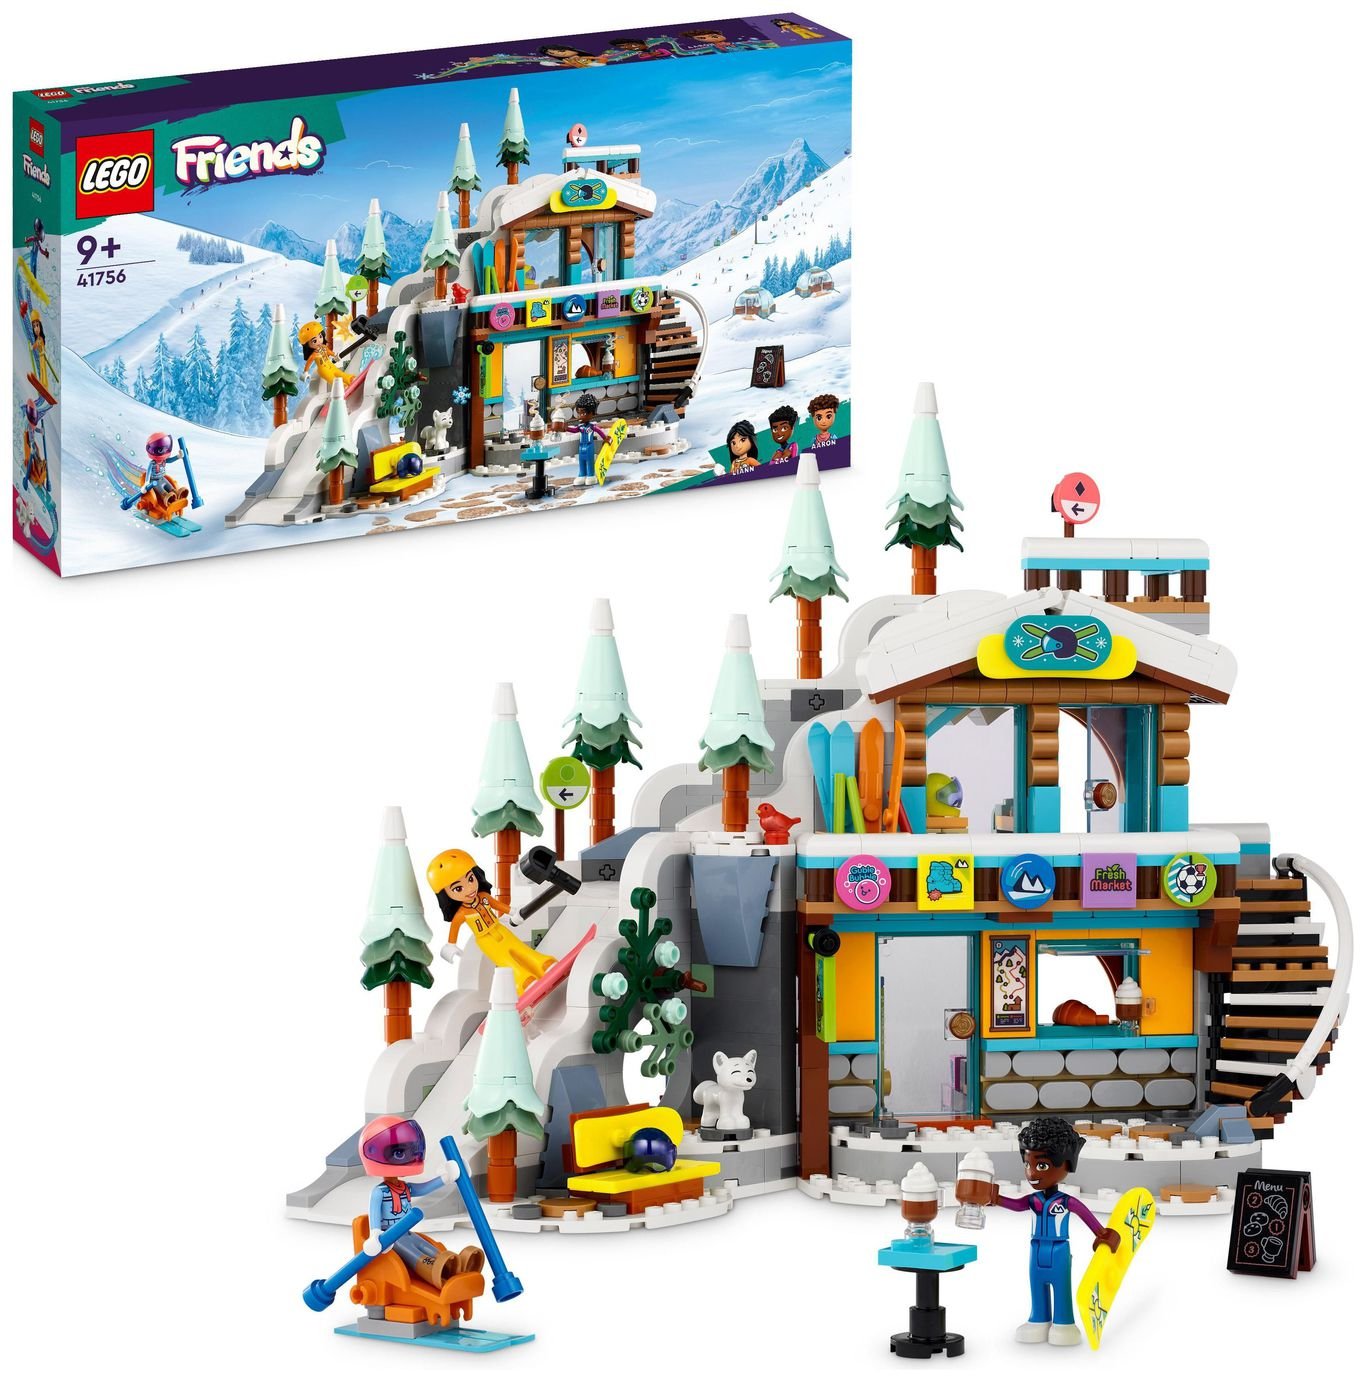 LEGO Friends Holiday Ski Slope and Café Winter Set 41756